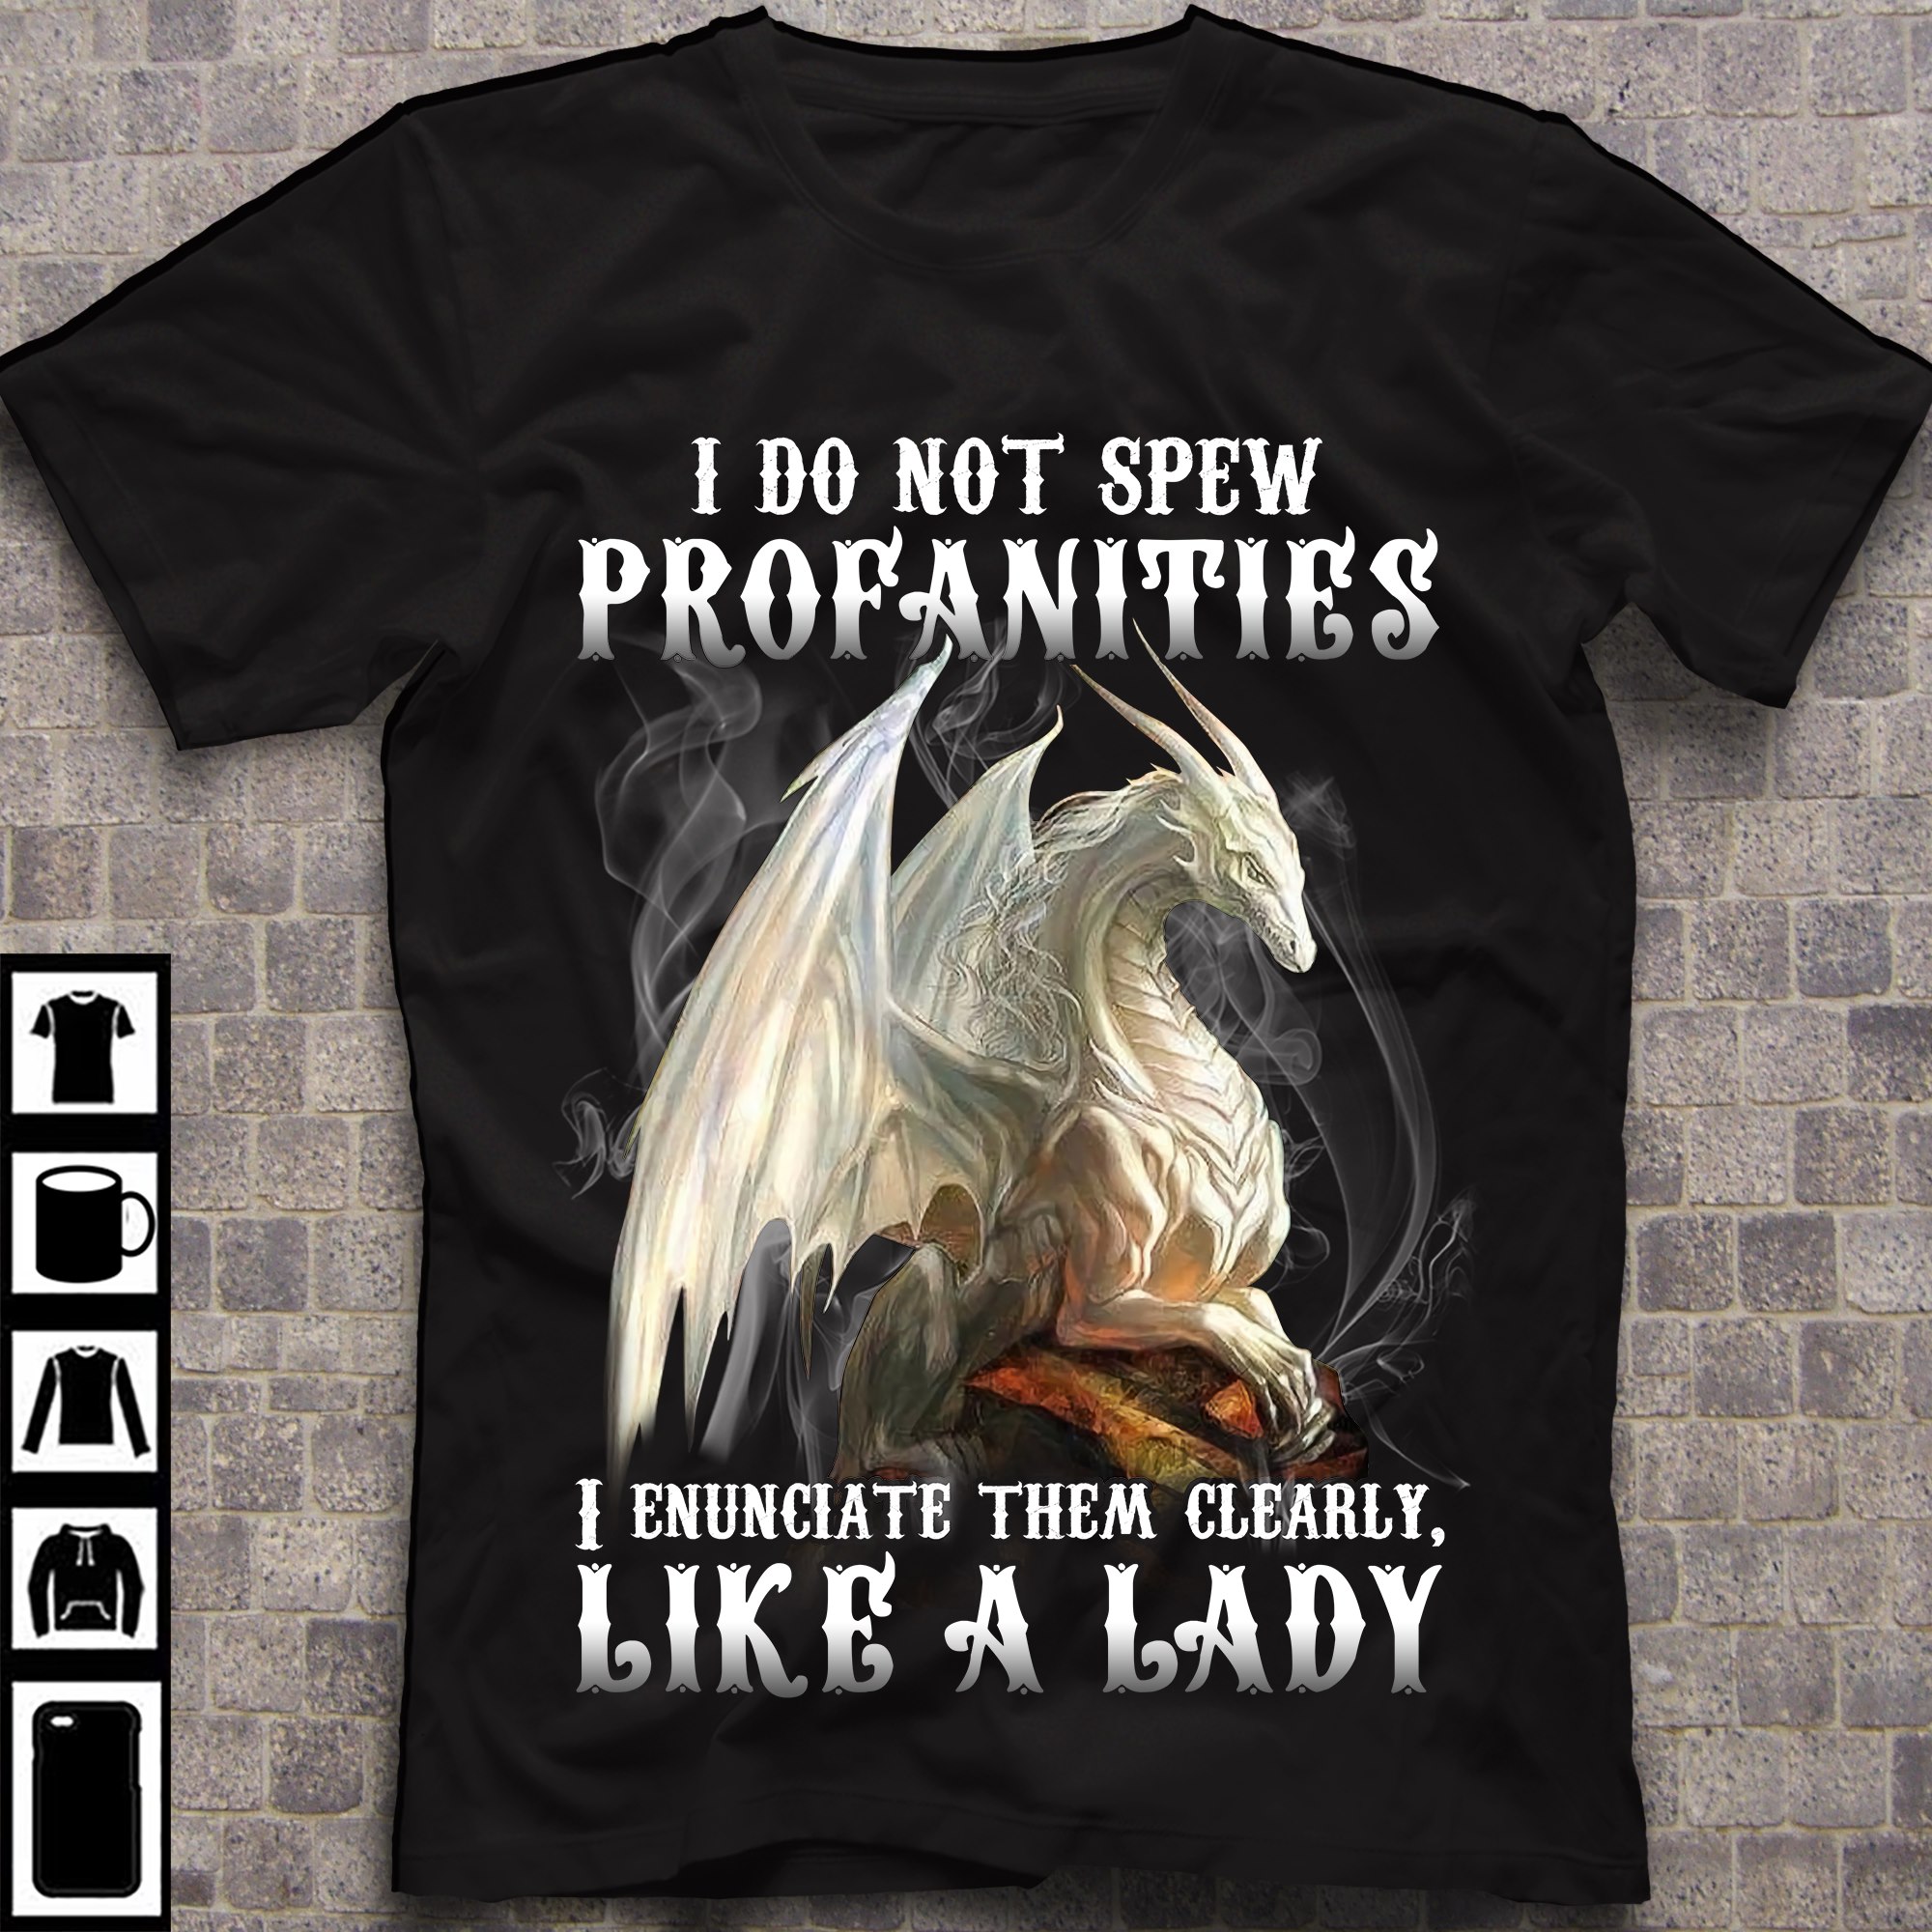 I do not spew profanities I enunciate them clearly like a lady - White dragon